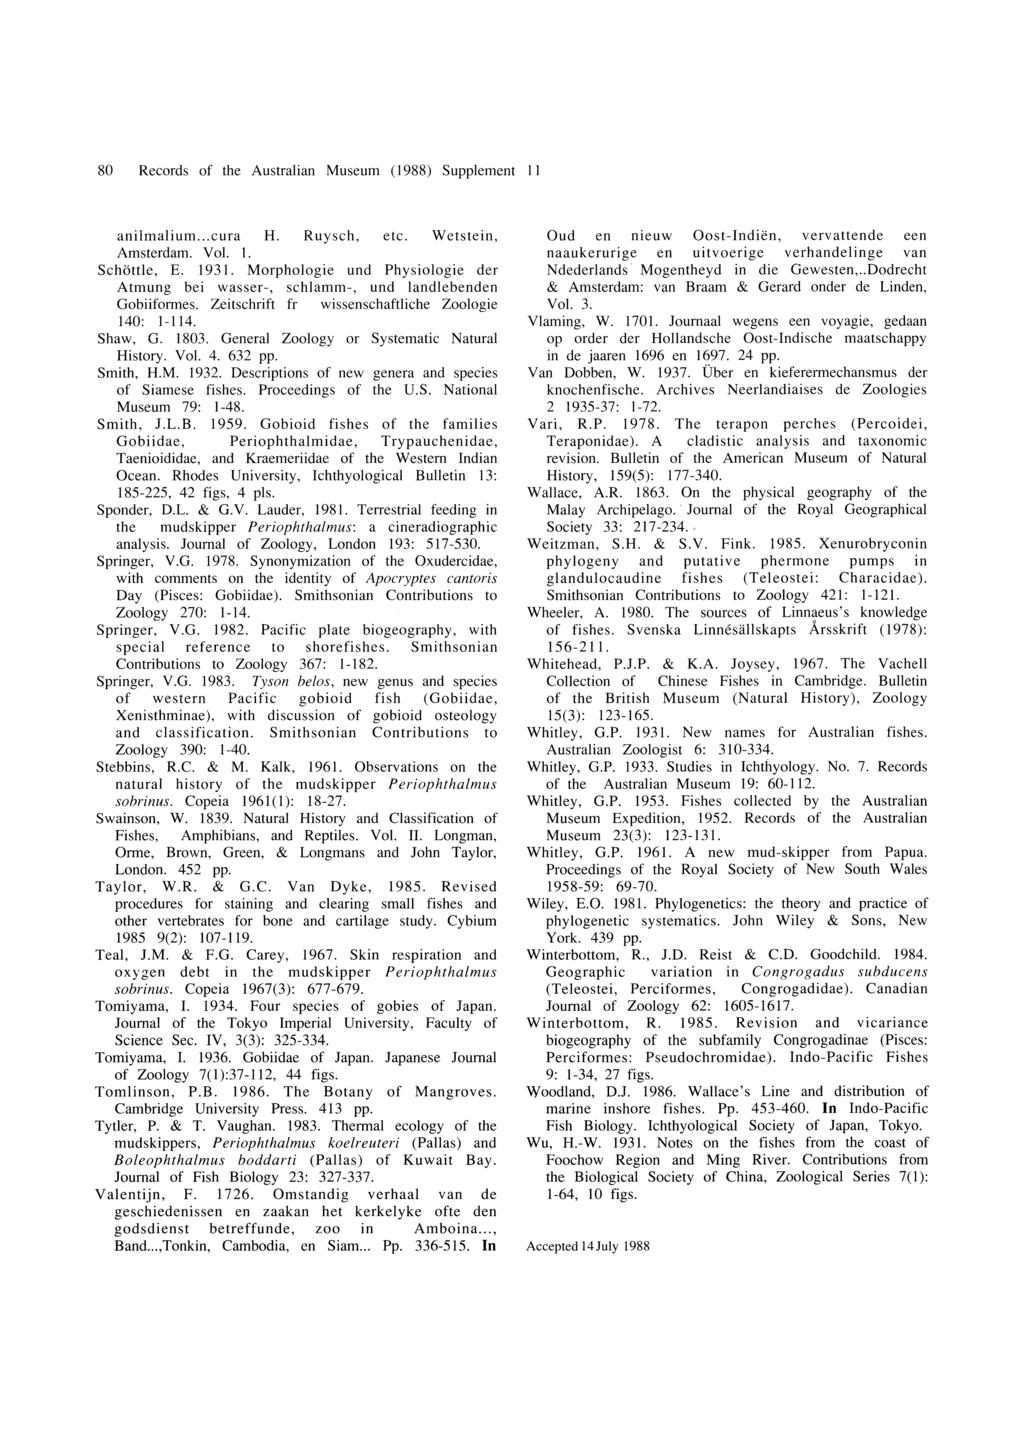 80 Records of the Australian Museum (1988) Supplement II anilmalium... cura H. Ruysch, etc. Wetstein, Amsterdam. Vol. 1. Schottle, E. 1931.